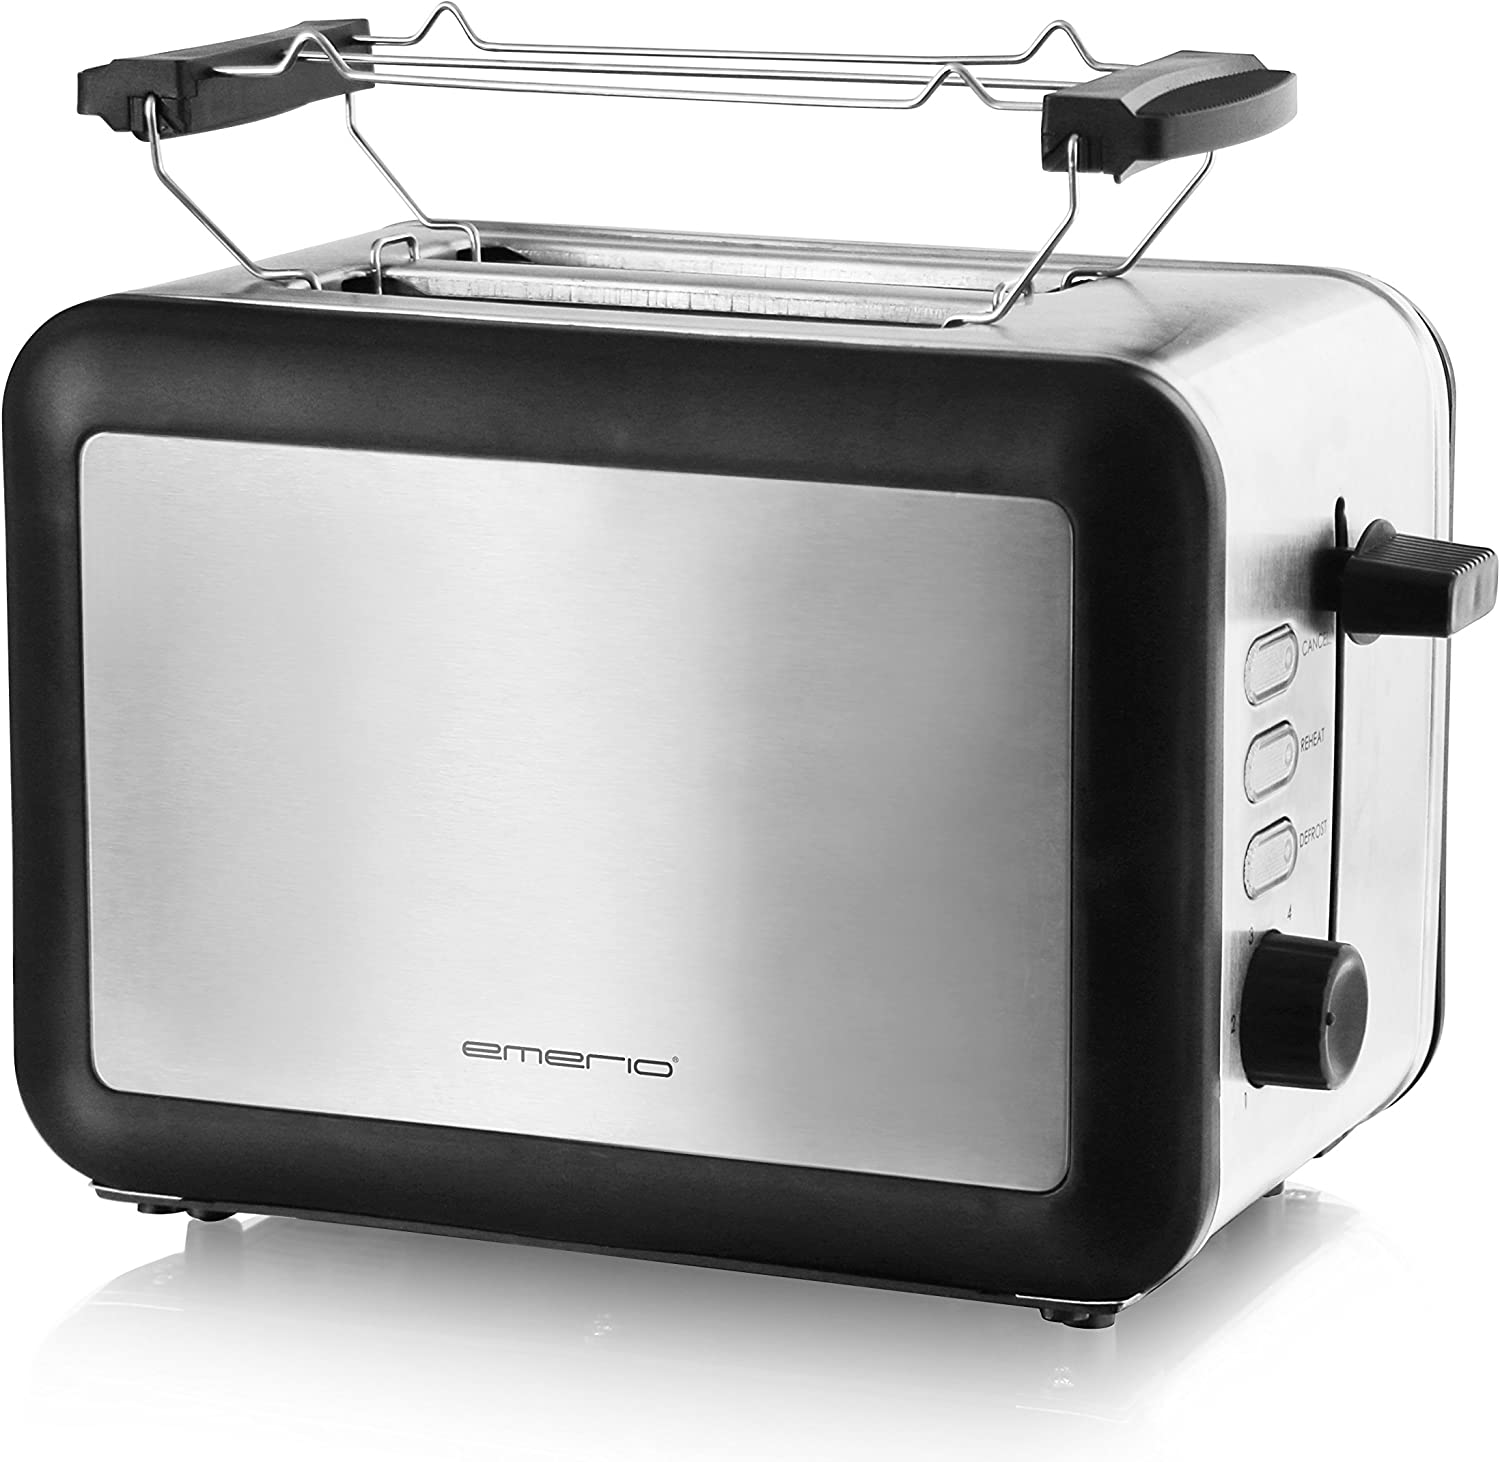 Emerio to-112826.1 Stainless Steel Toaster